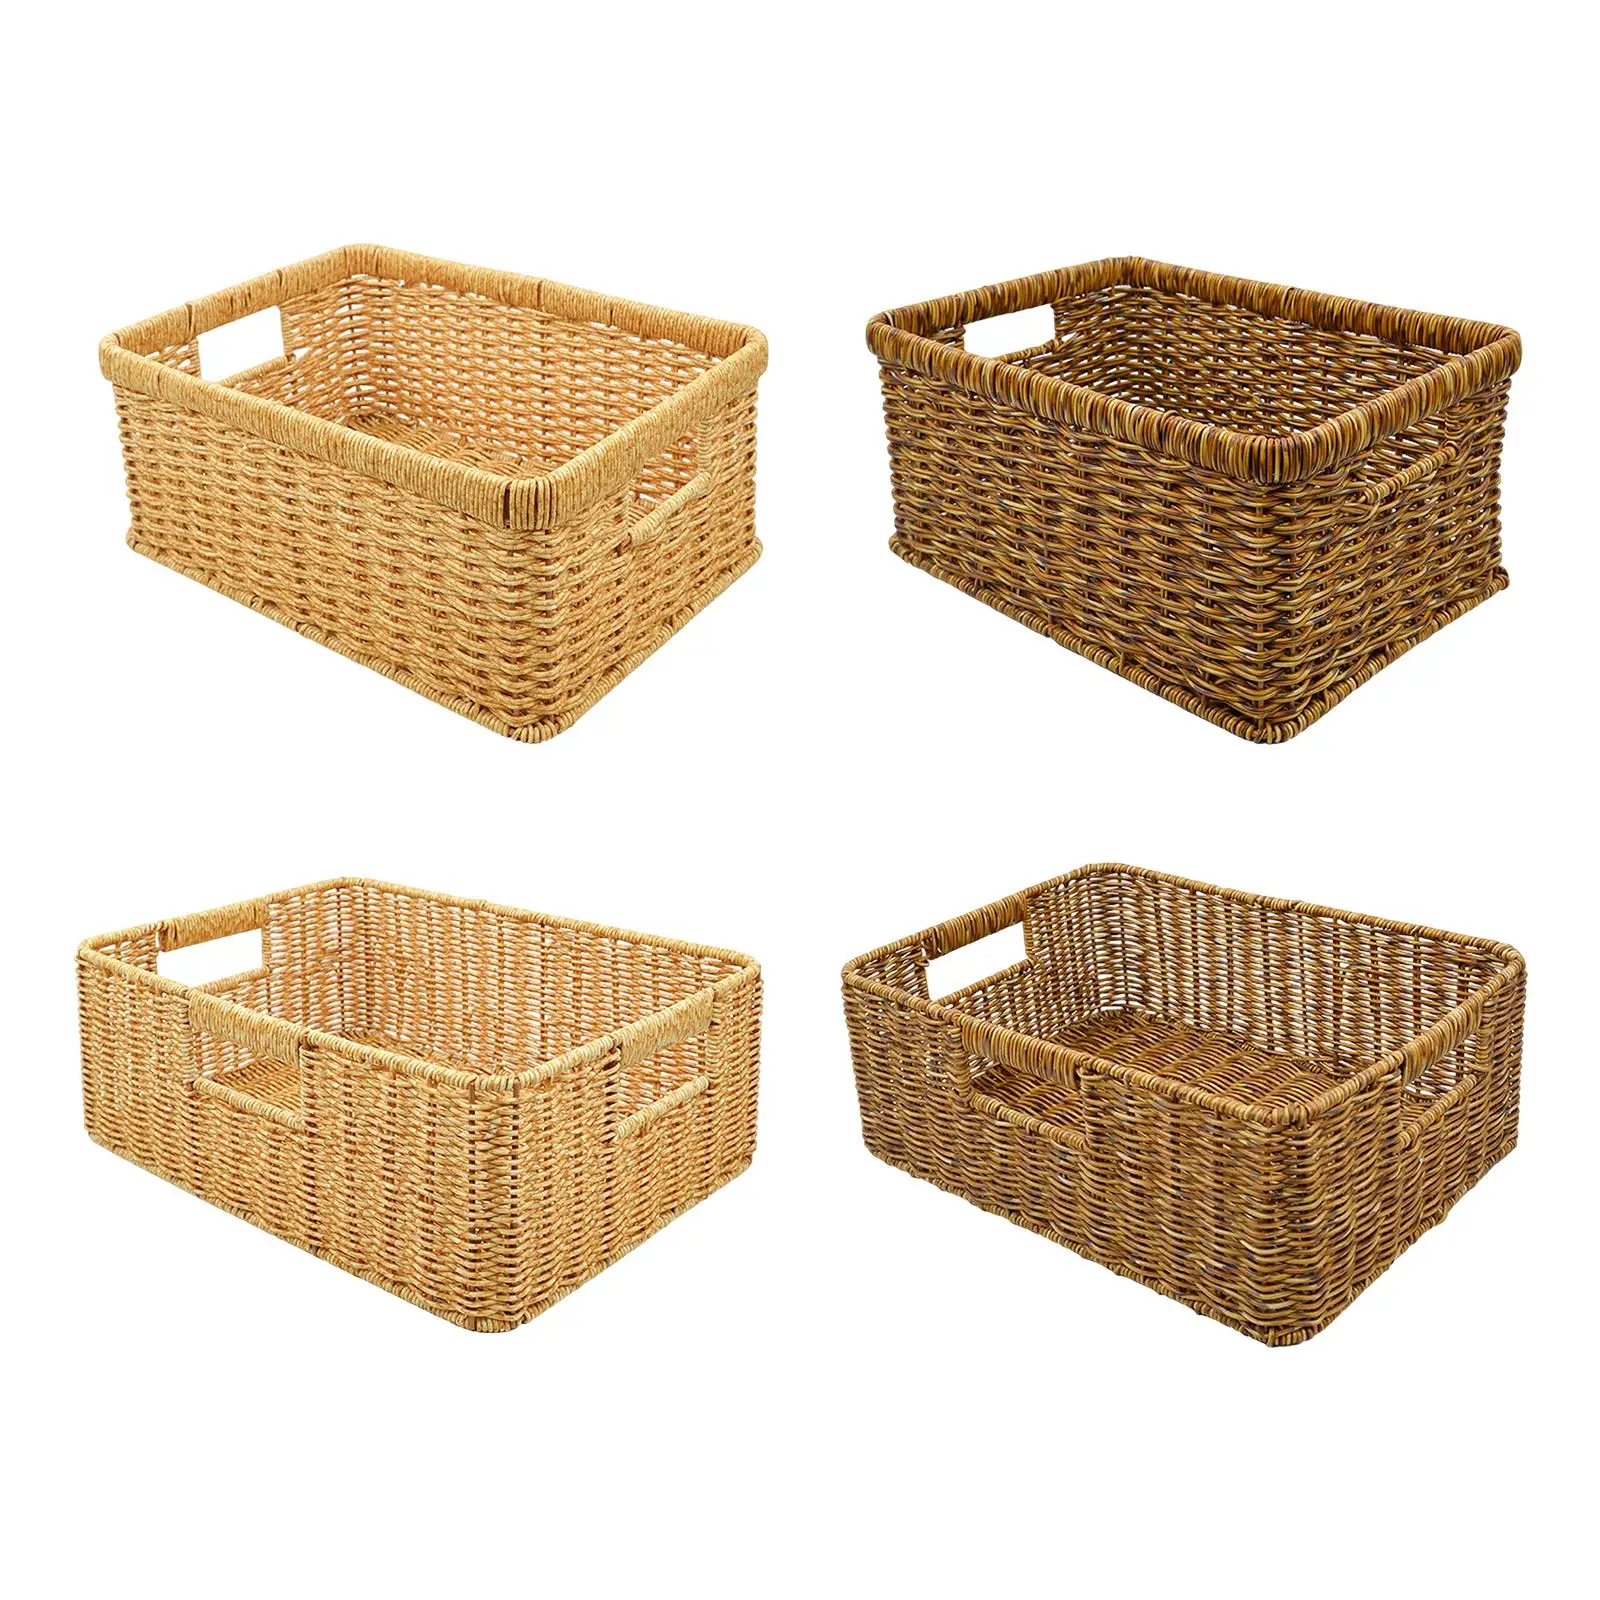 Rattan Basket Multipurpose with Handles Sundries Storage Basket Woven Storage Basket for Countertop Living Room Shelf